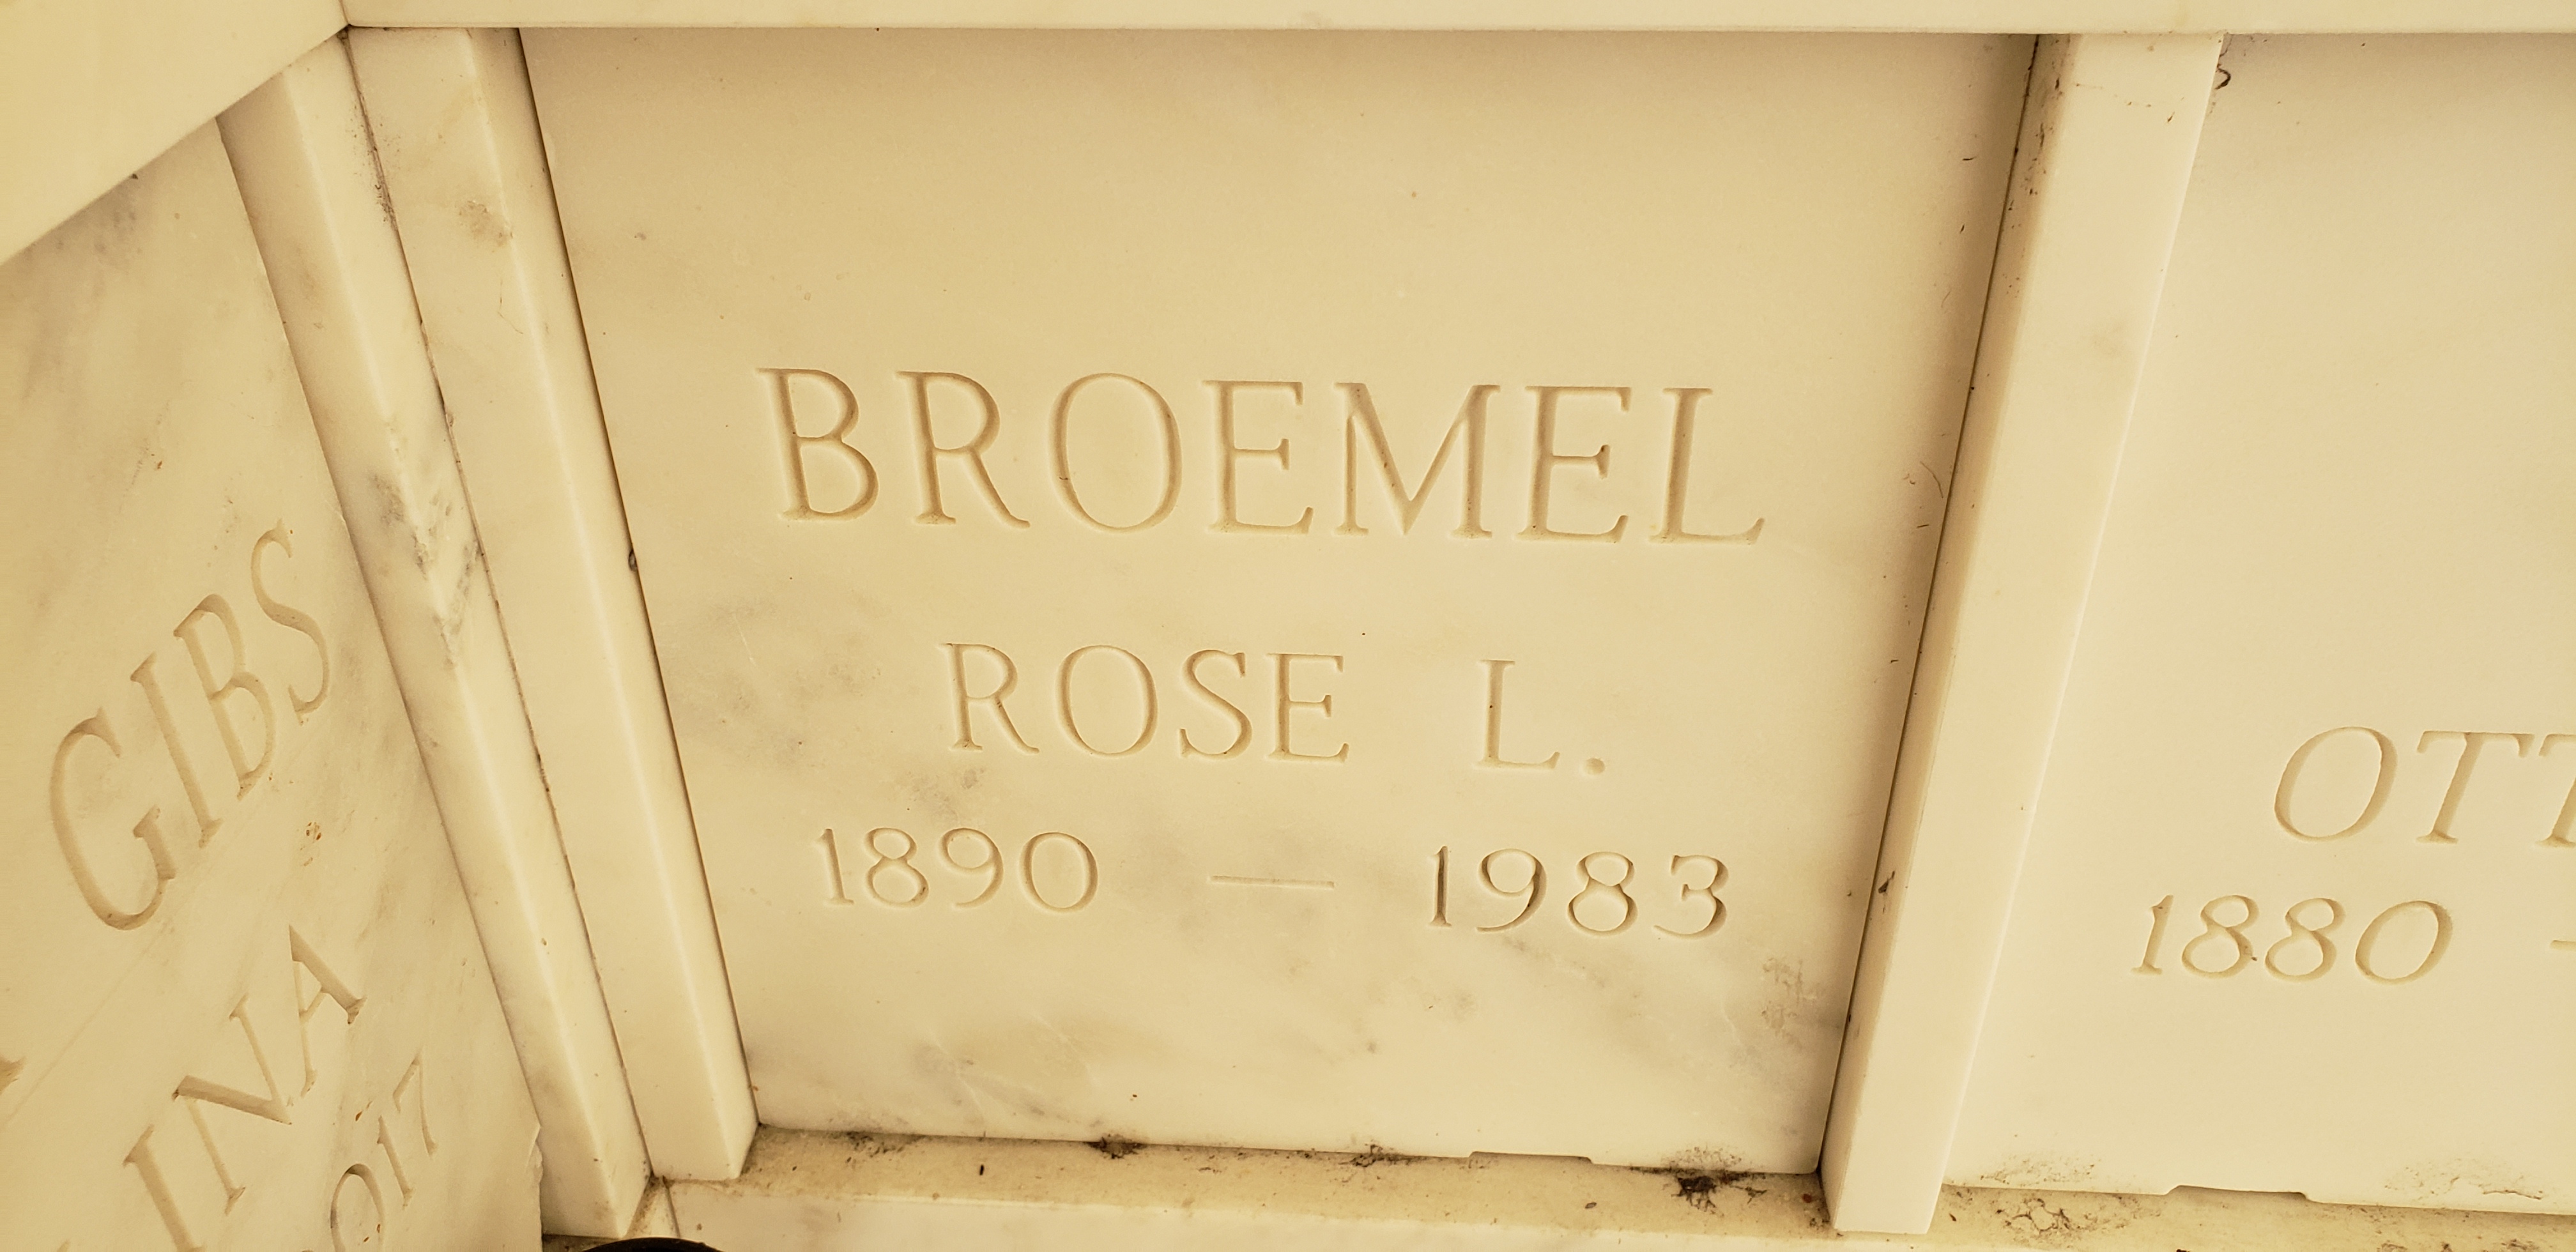 Rose L Broemel